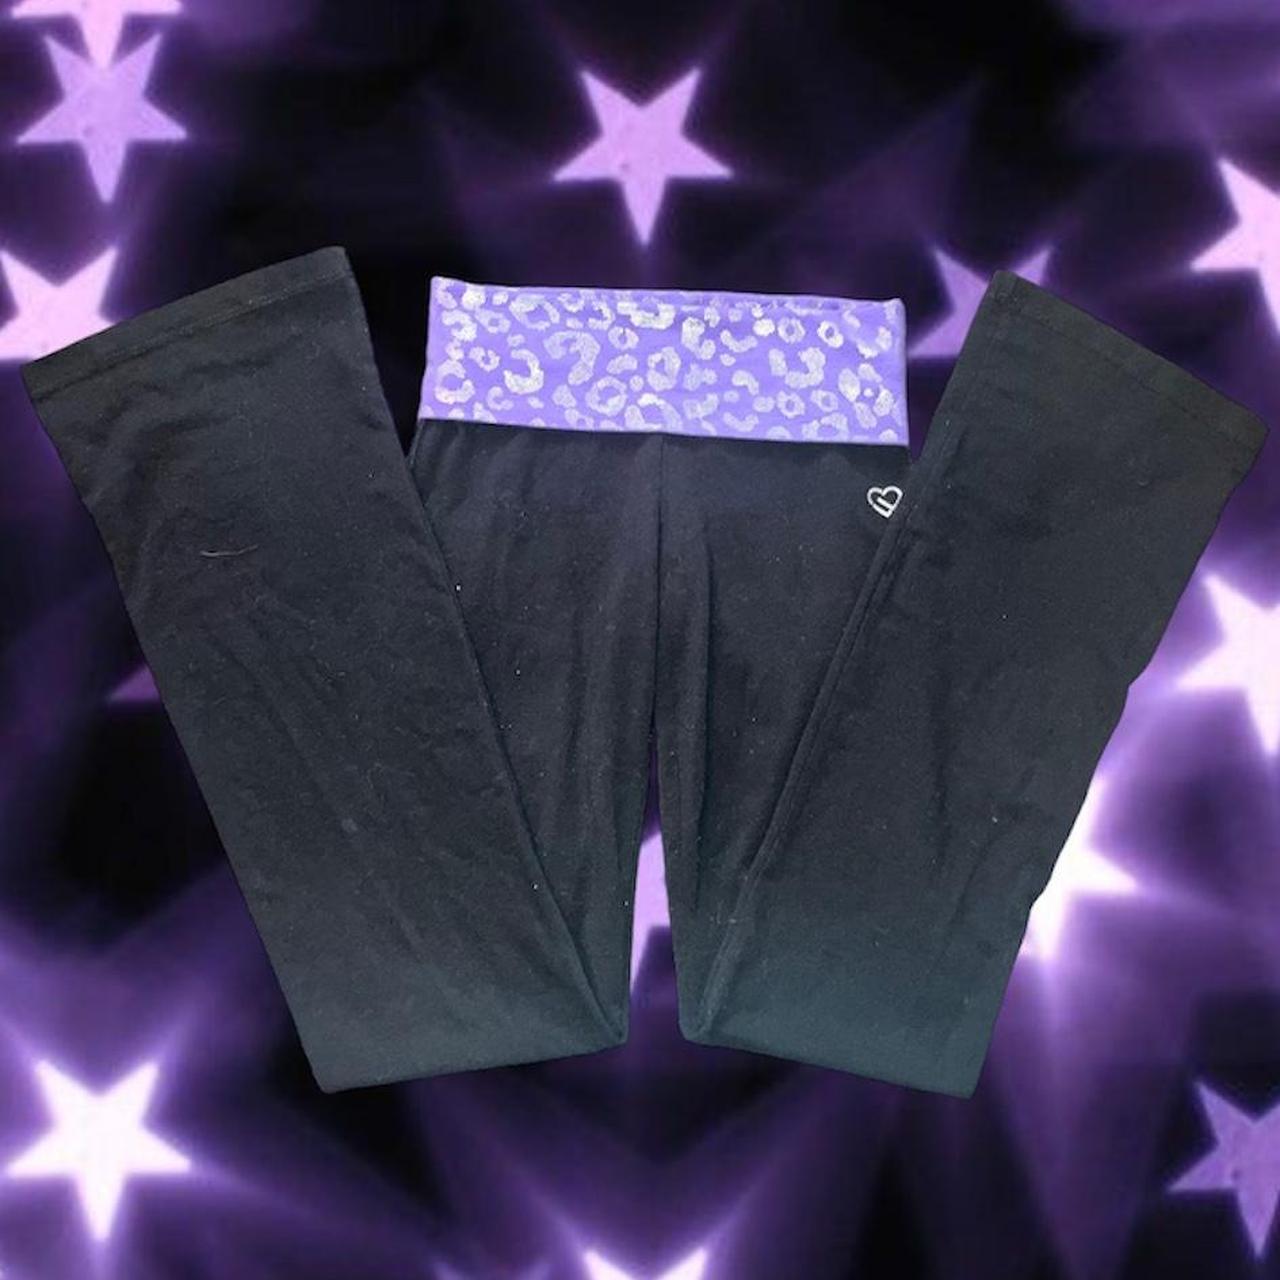 Y2K fold over flare pants Yoga pant/sweatpant -I - Depop